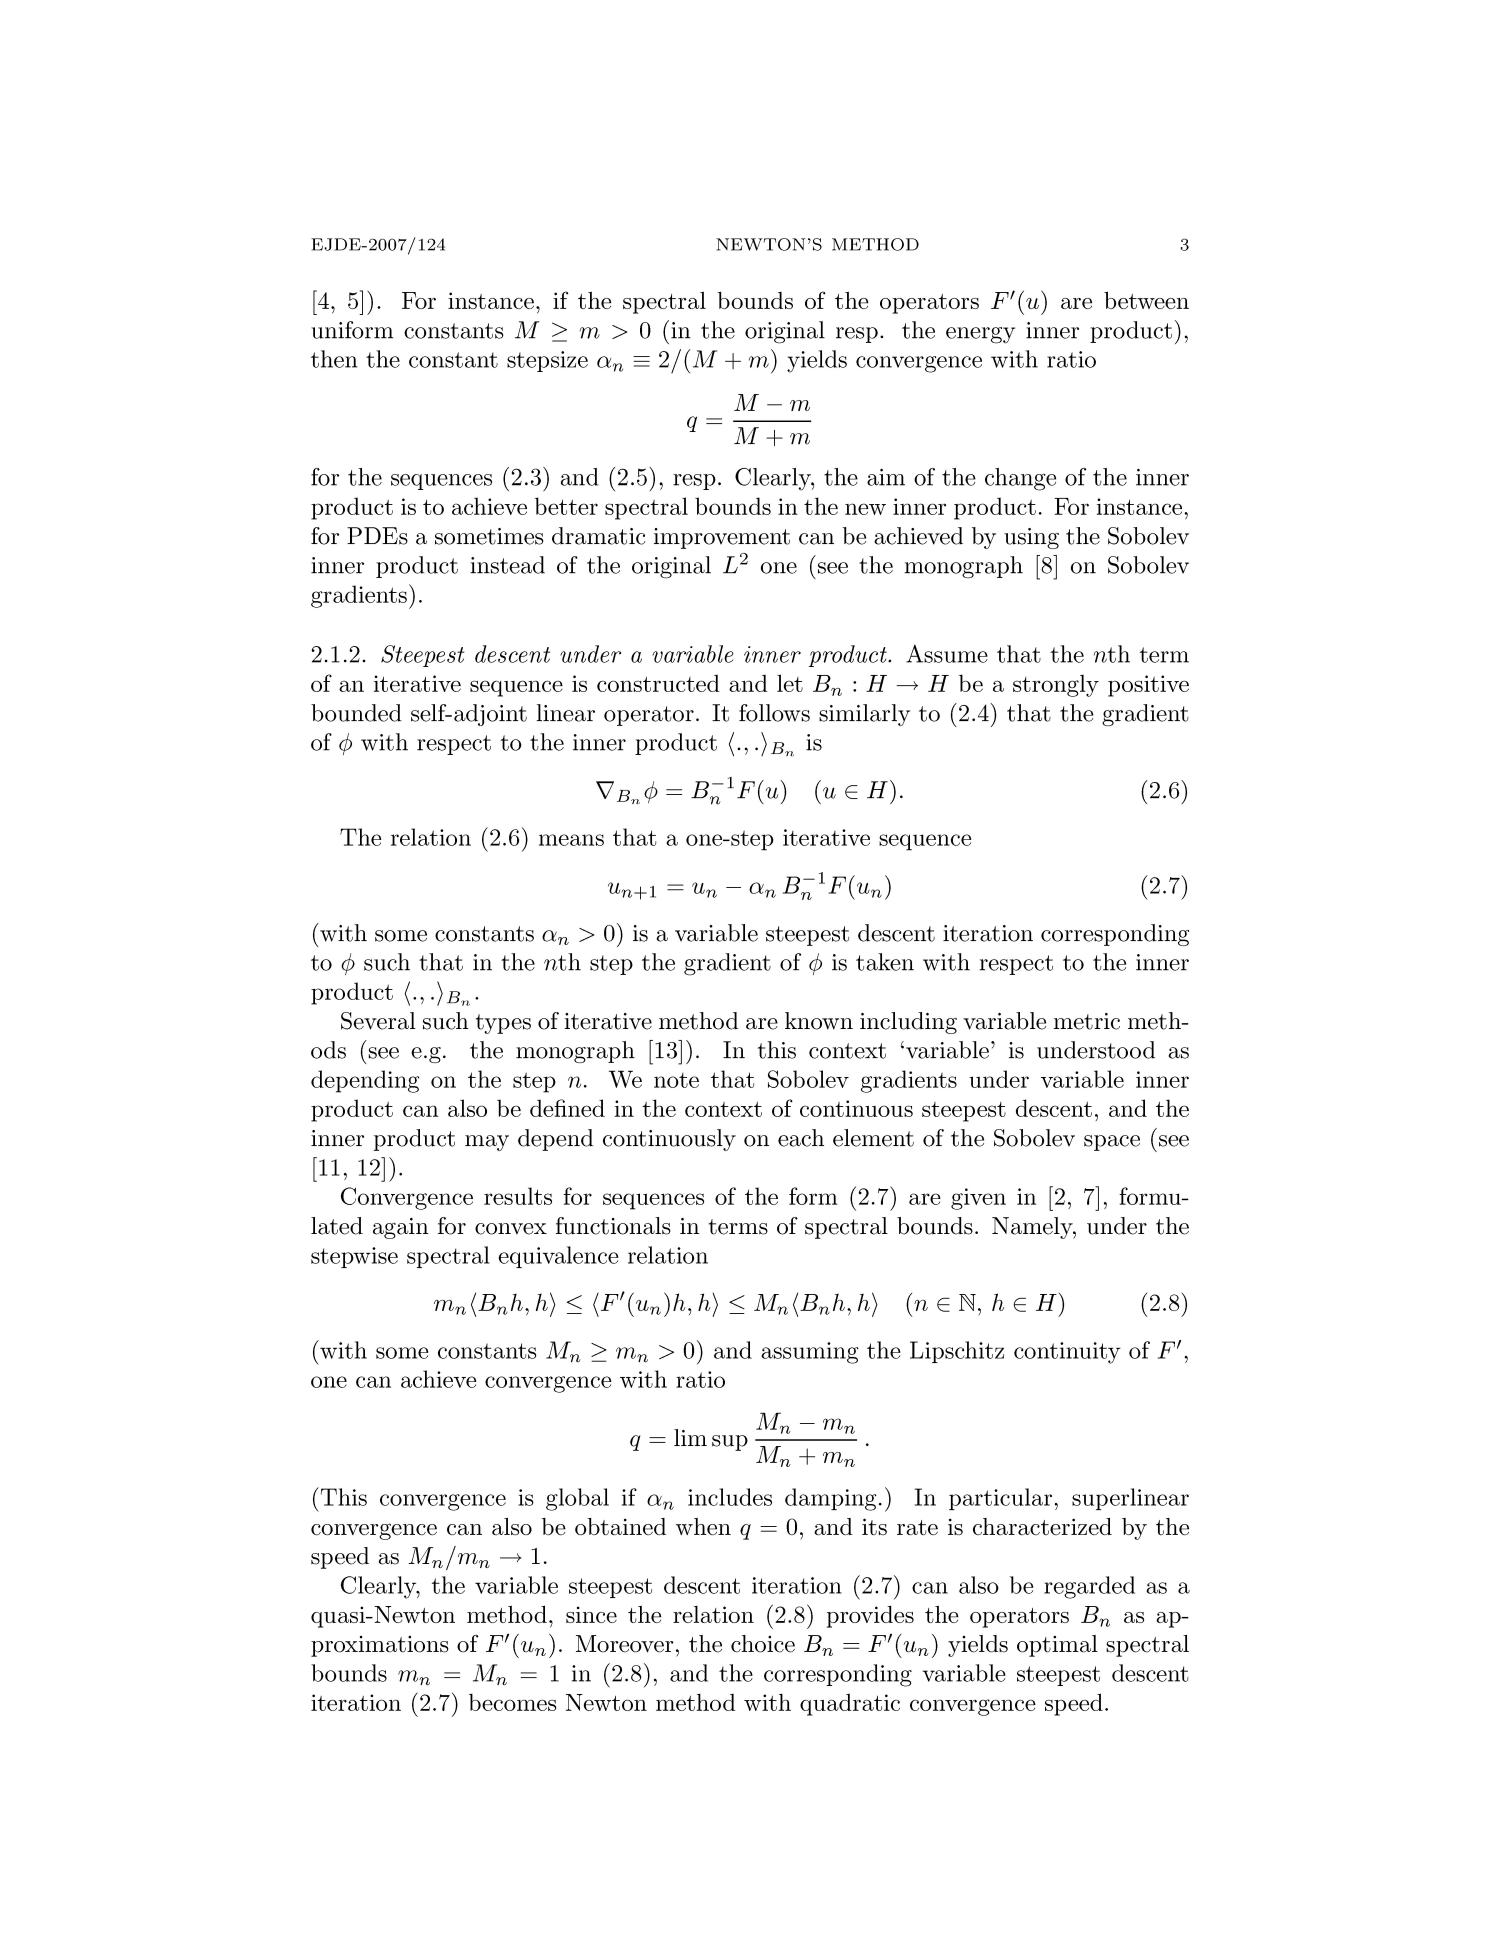 Newton’s Method in the Context of Gradients
                                                
                                                    3
                                                